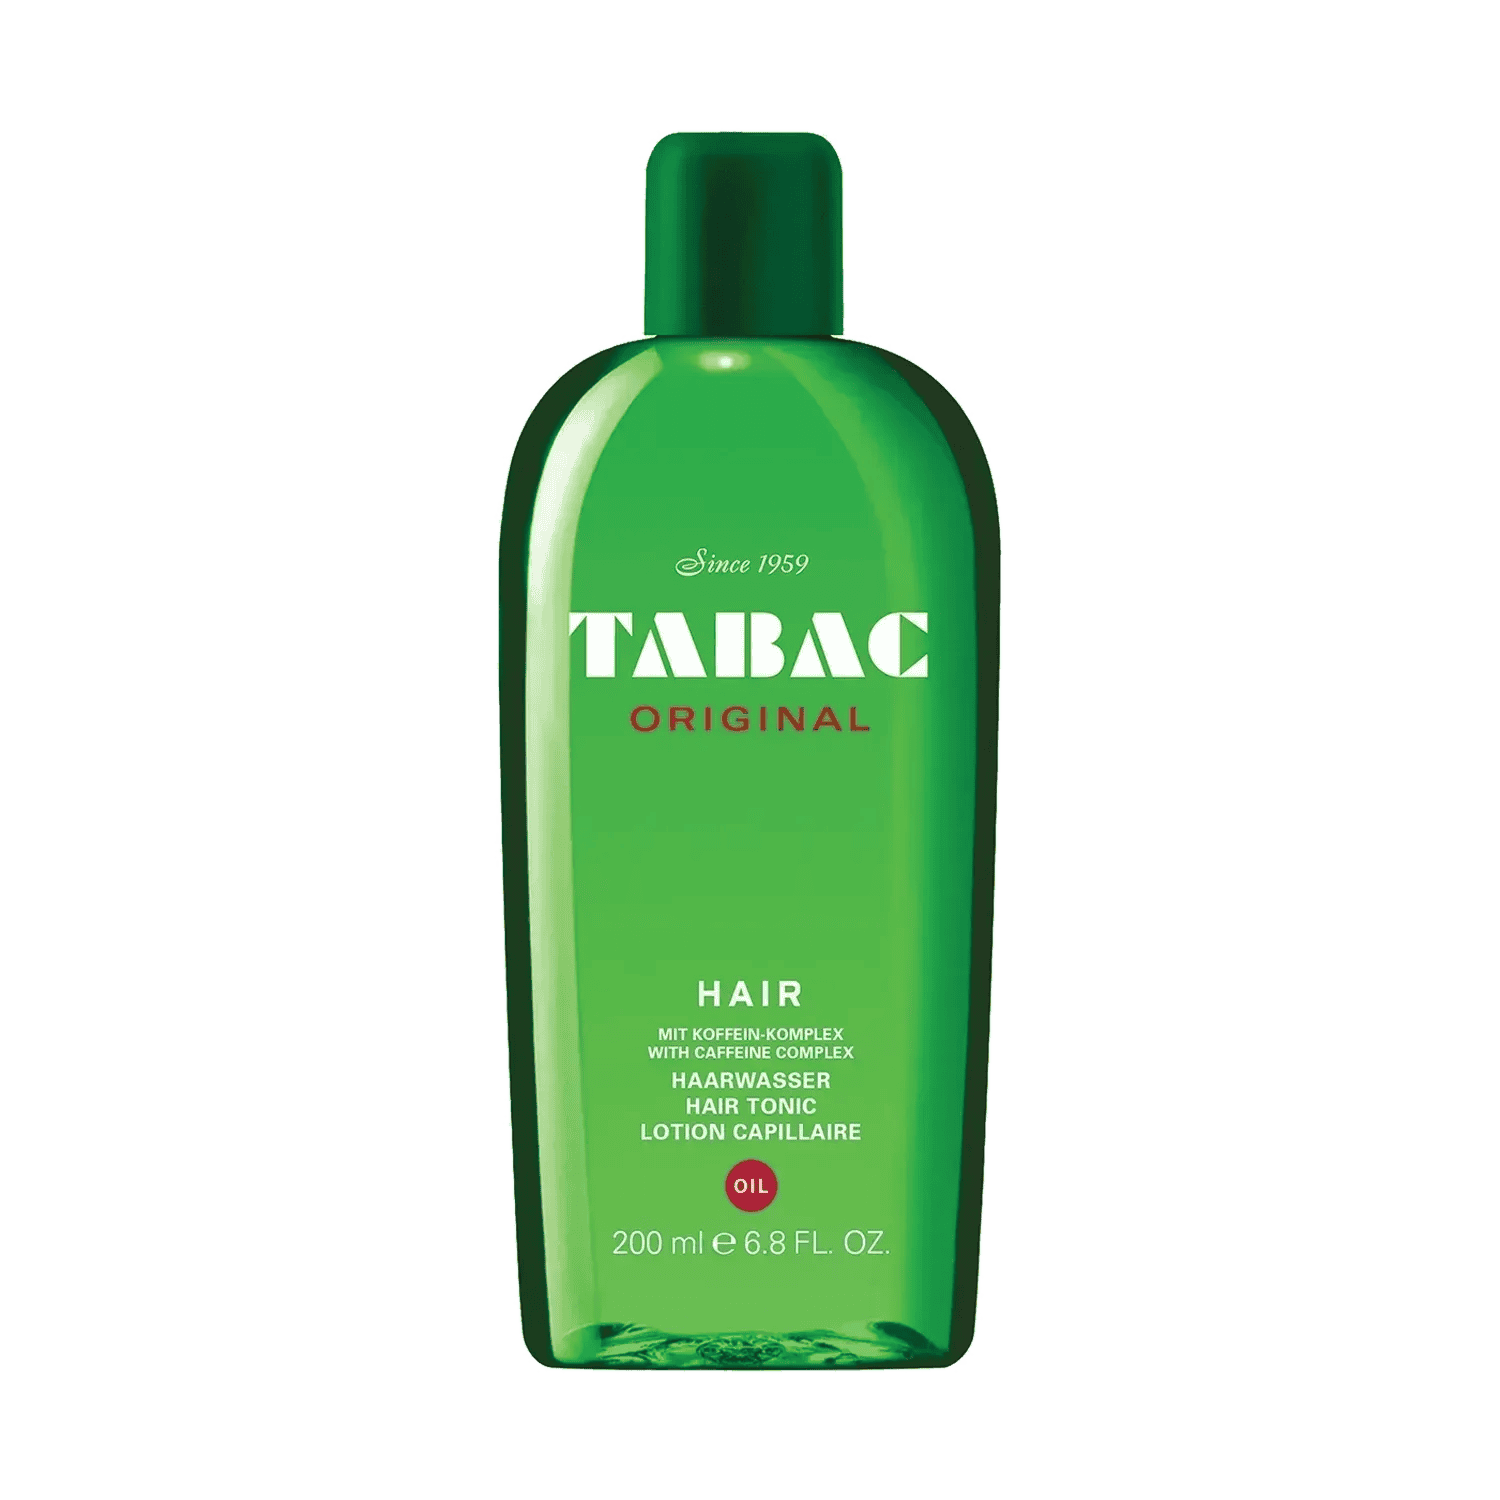 Tabac | Tabac Original Hair Tonic Oil (200ml)